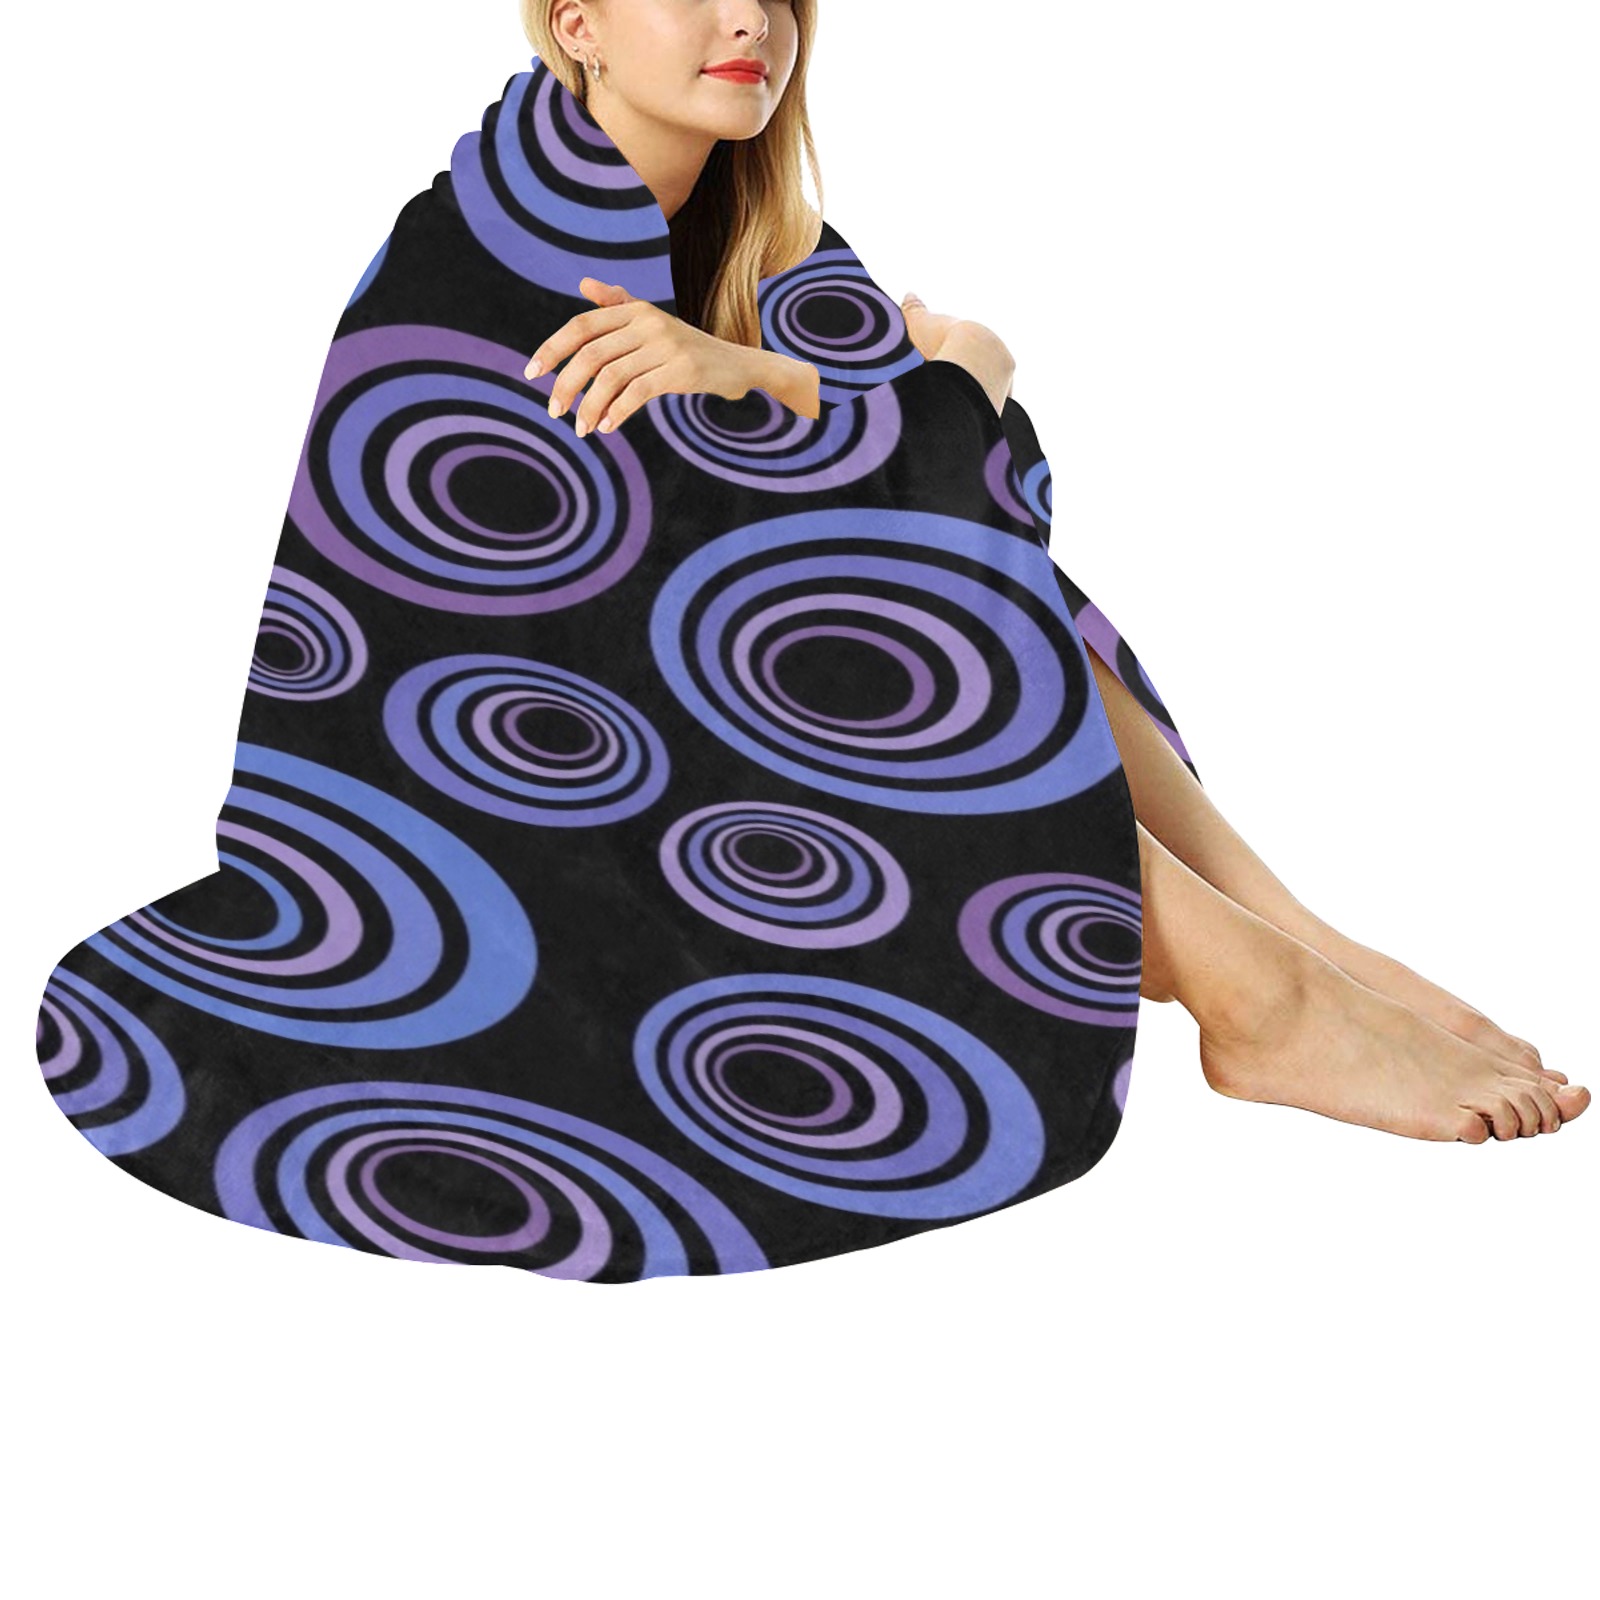 Retro Psychedelic Pretty Purple Pattern Circular Ultra-Soft Micro Fleece Blanket 47"